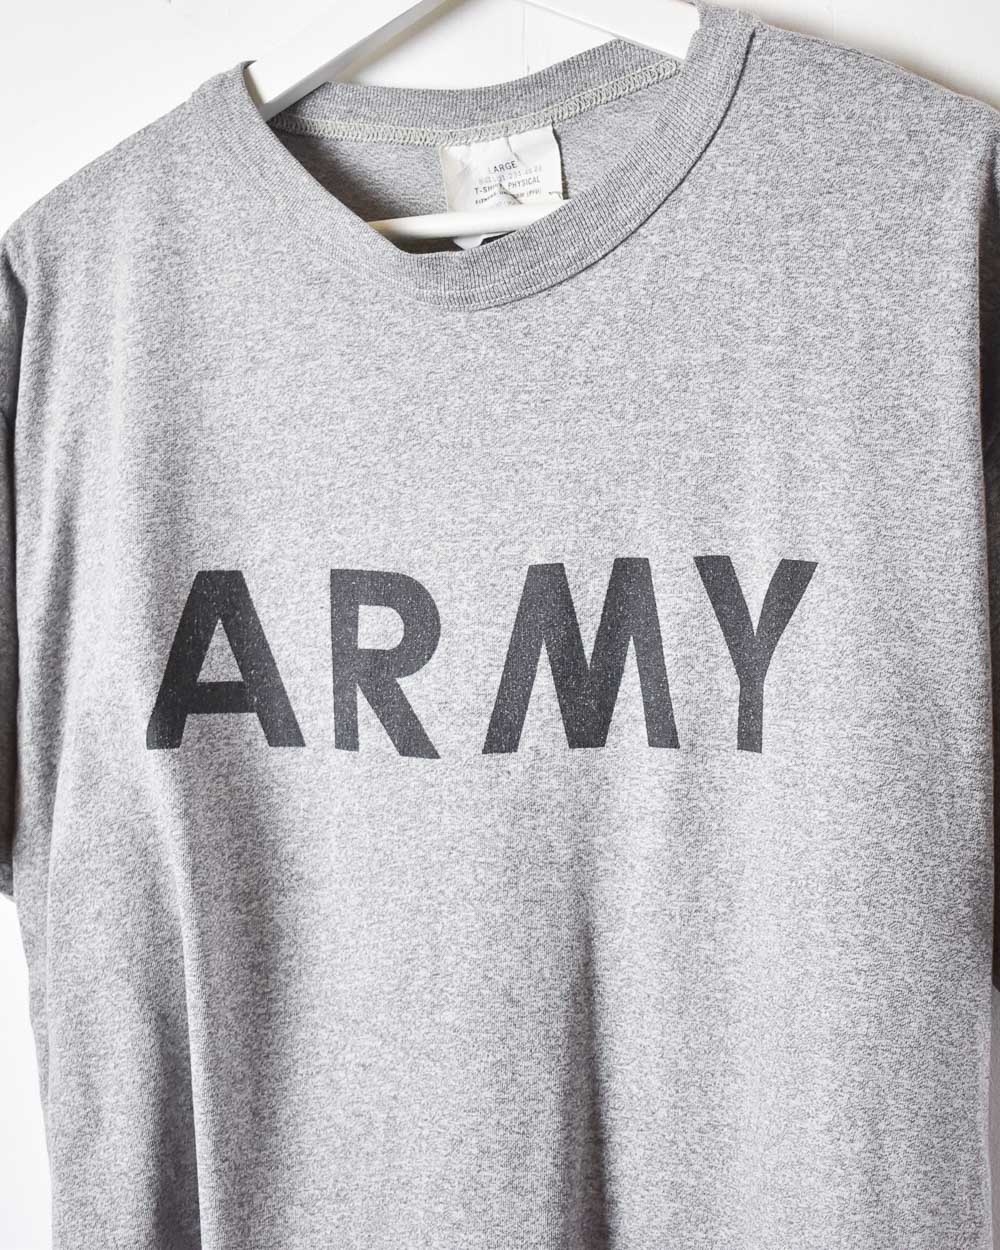 Stone Army Fitness Single Stitch T-Shirt - Medium